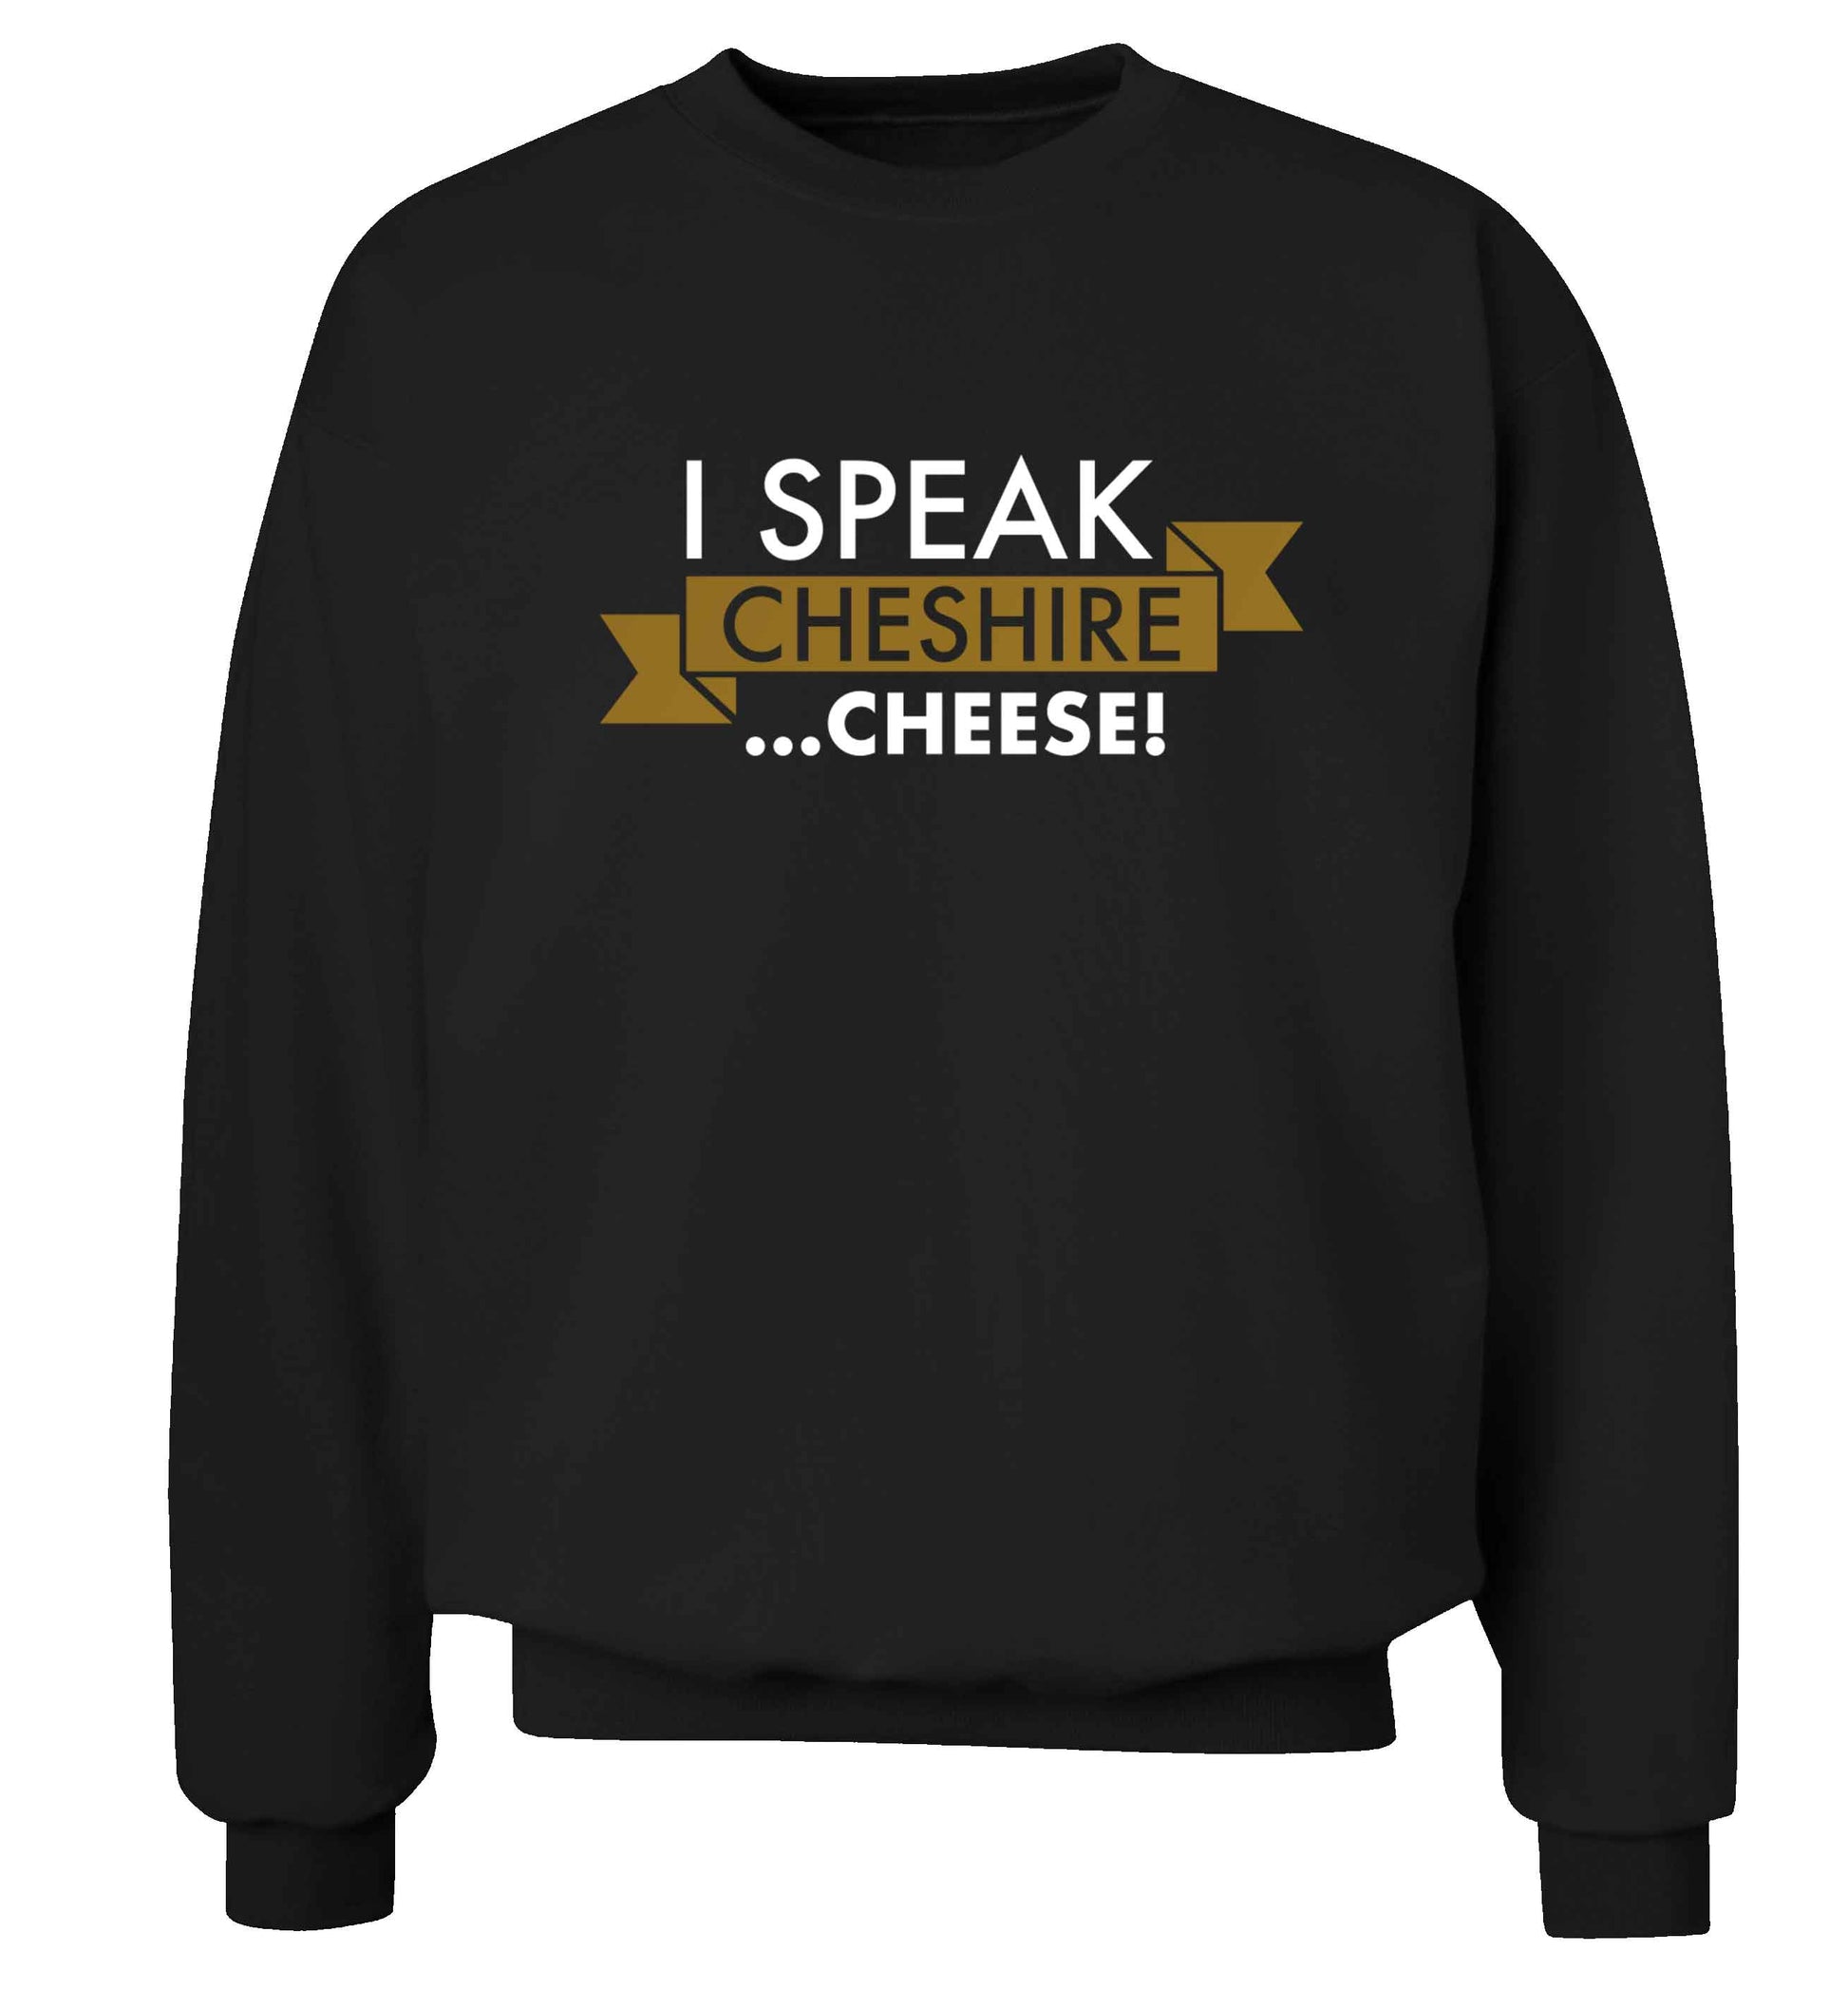 I speak Cheshire cheese Adult's unisex black Sweater 2XL